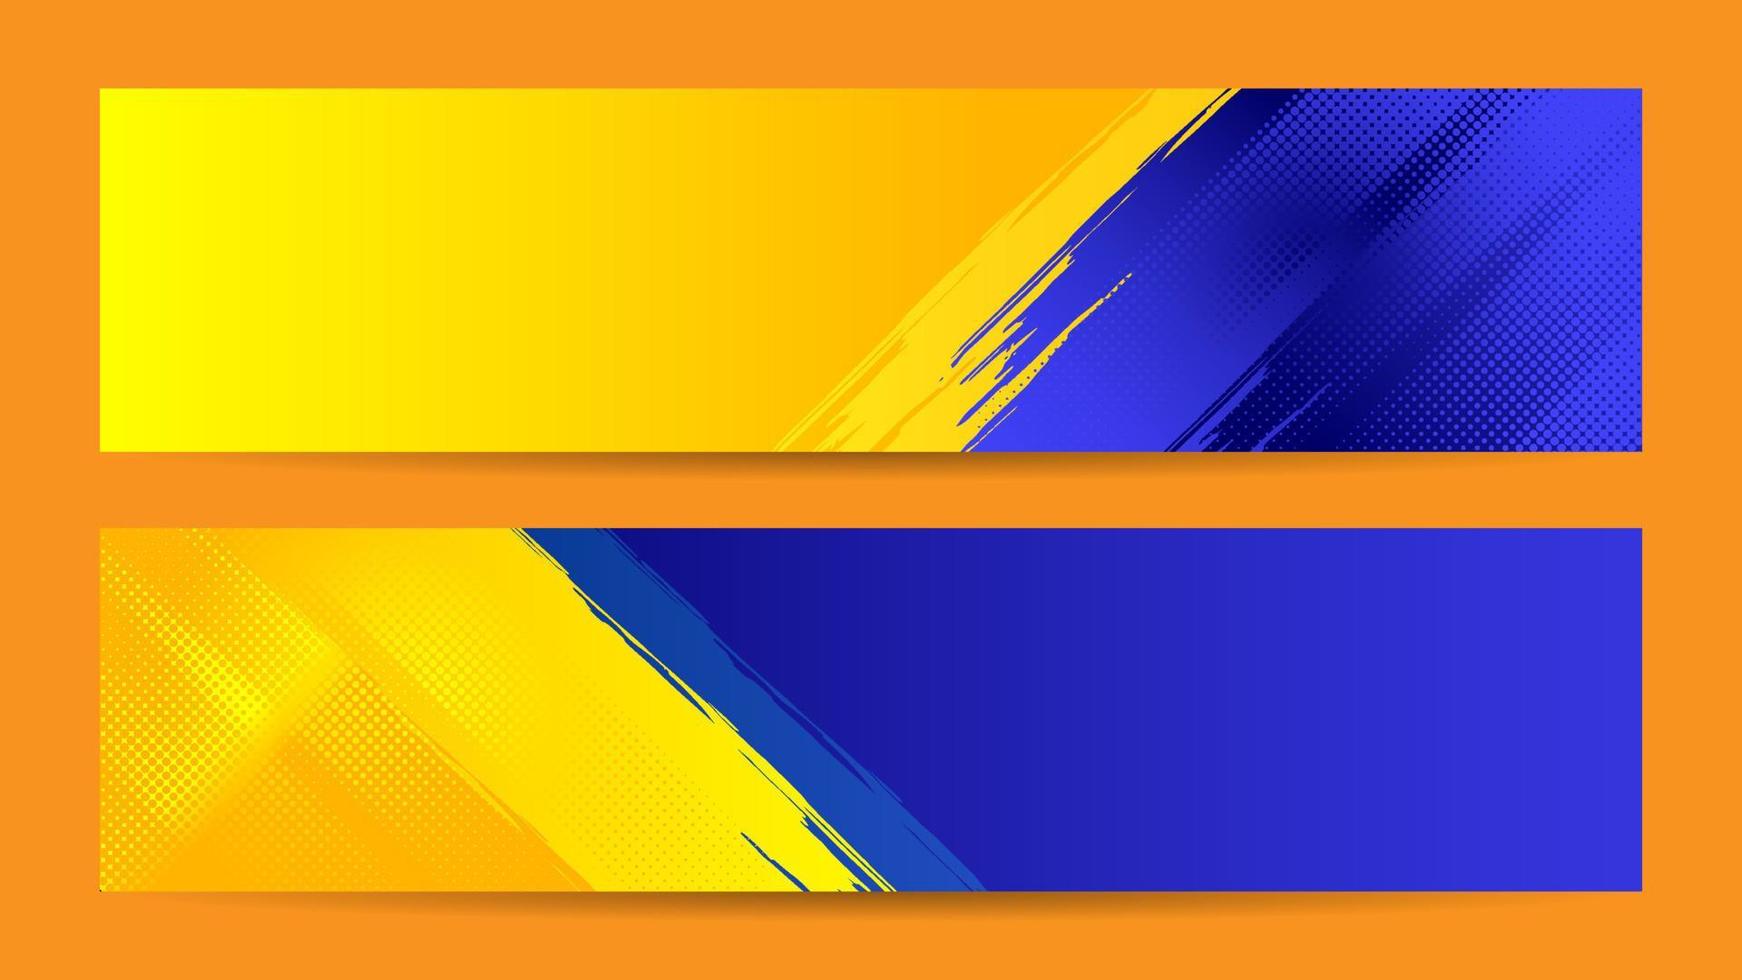 abstract grunge achtergrond vector met verf borstel en halftone effect, sjabloon ontwerp banier met helling blauw en geel kleur van Oekraïne vlag